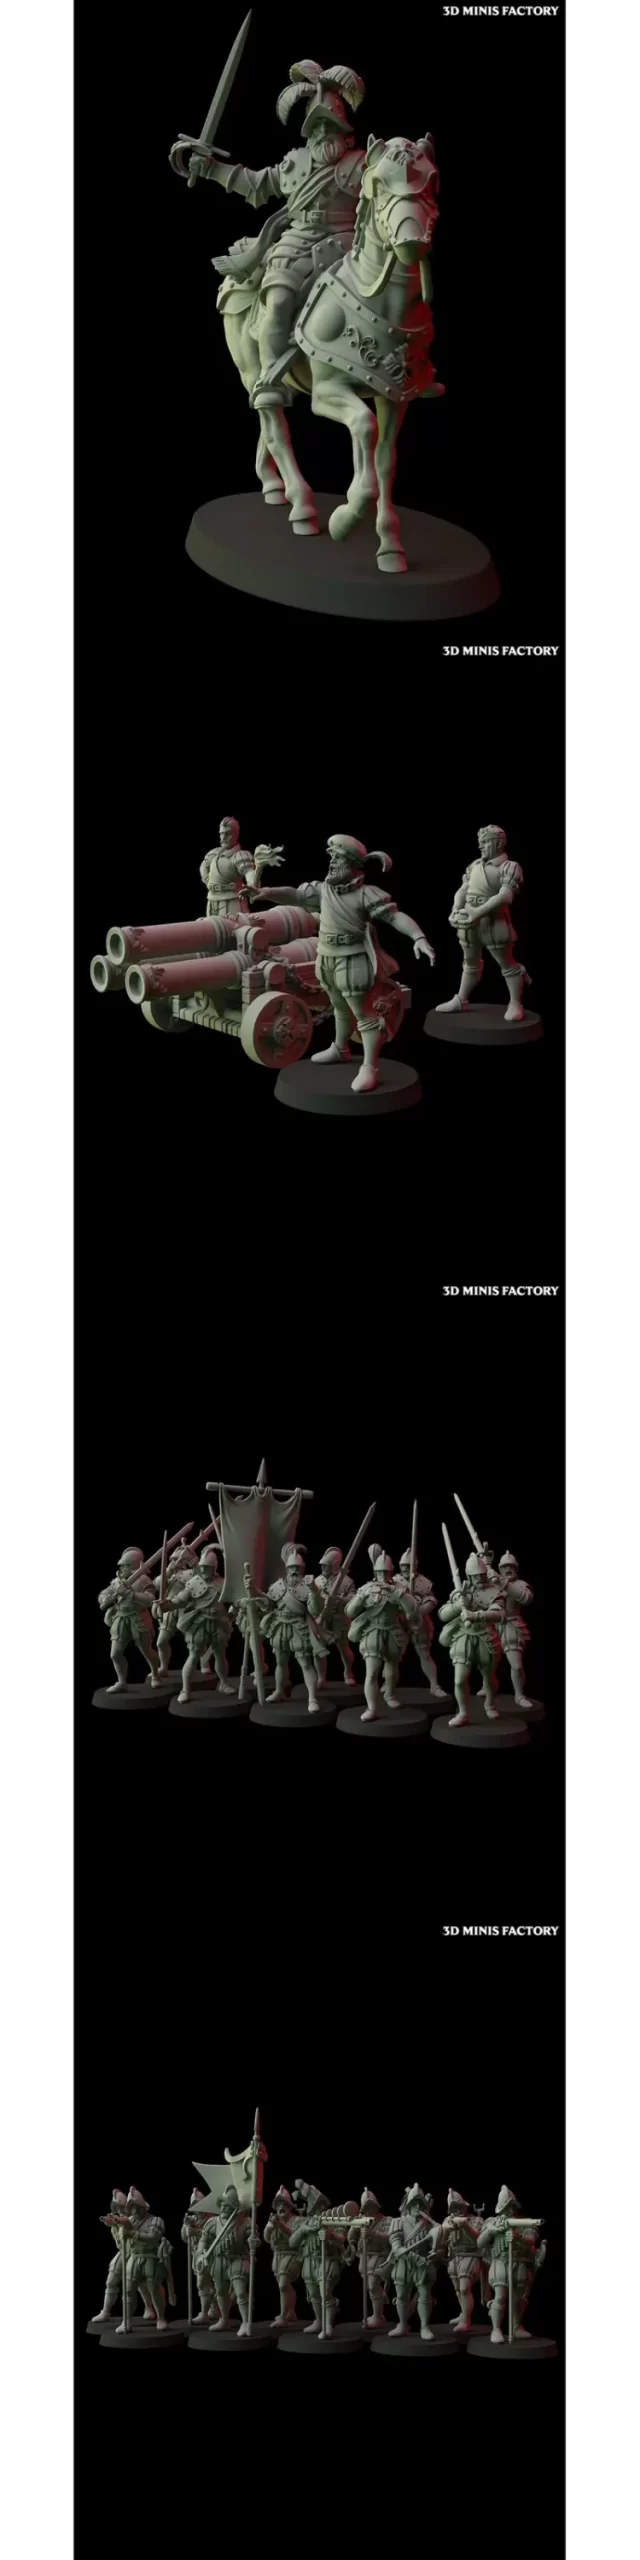 Fantasy Cult Miniatures - Empire Soldiers